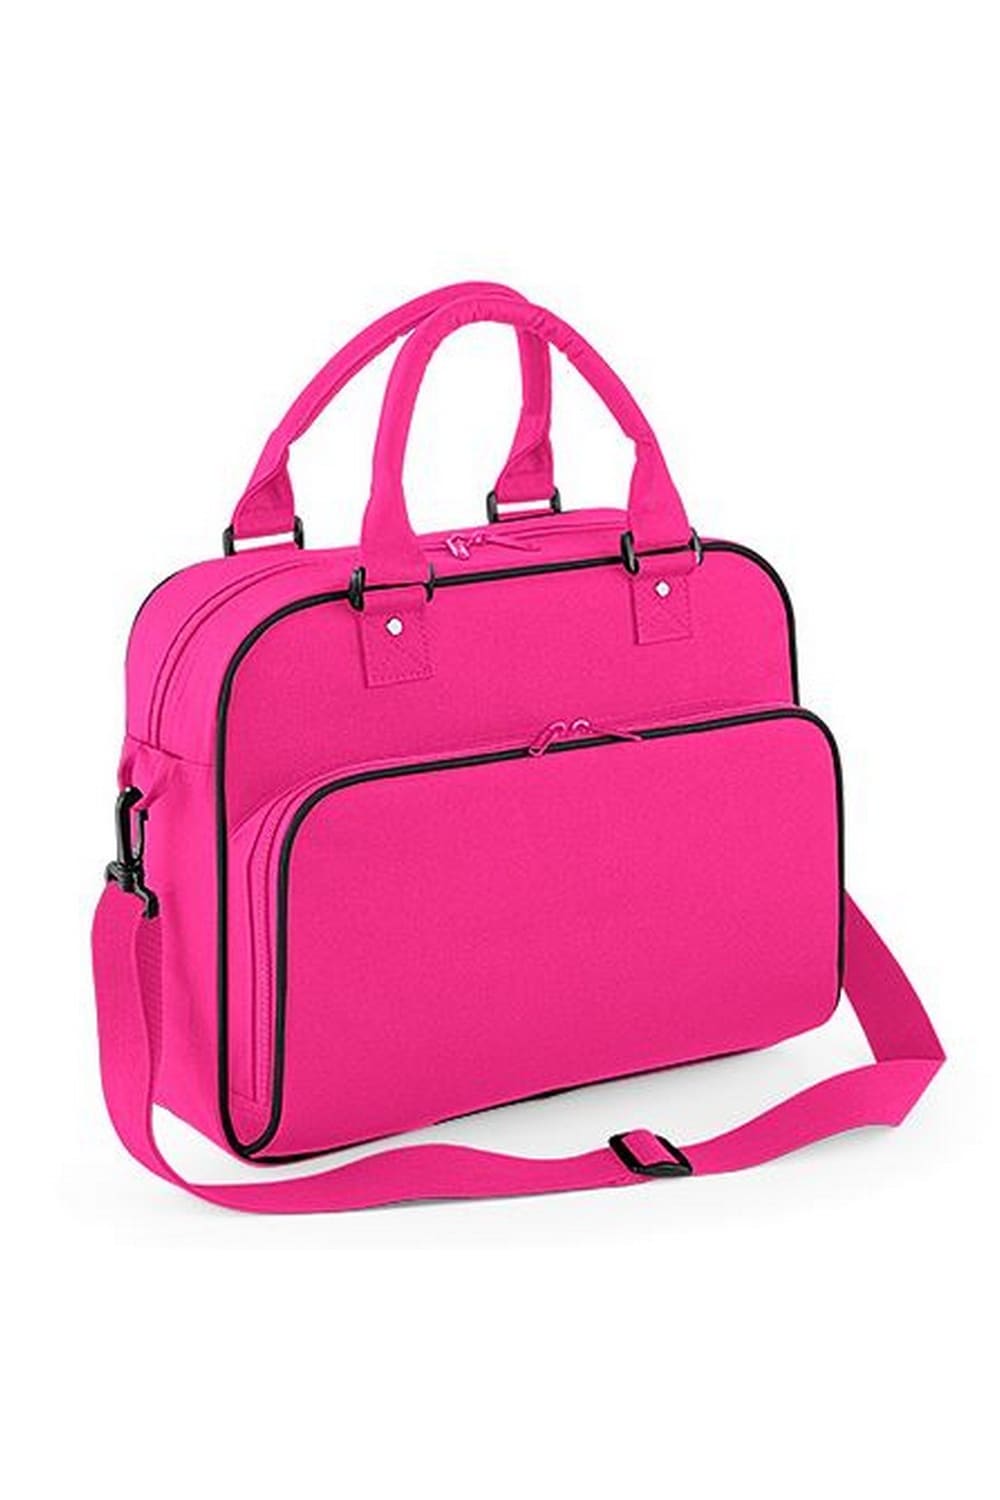 Bagbase Compact Junior Dance Messenger Bag (15 Liters) (Fuchsia/Black) (One Size)